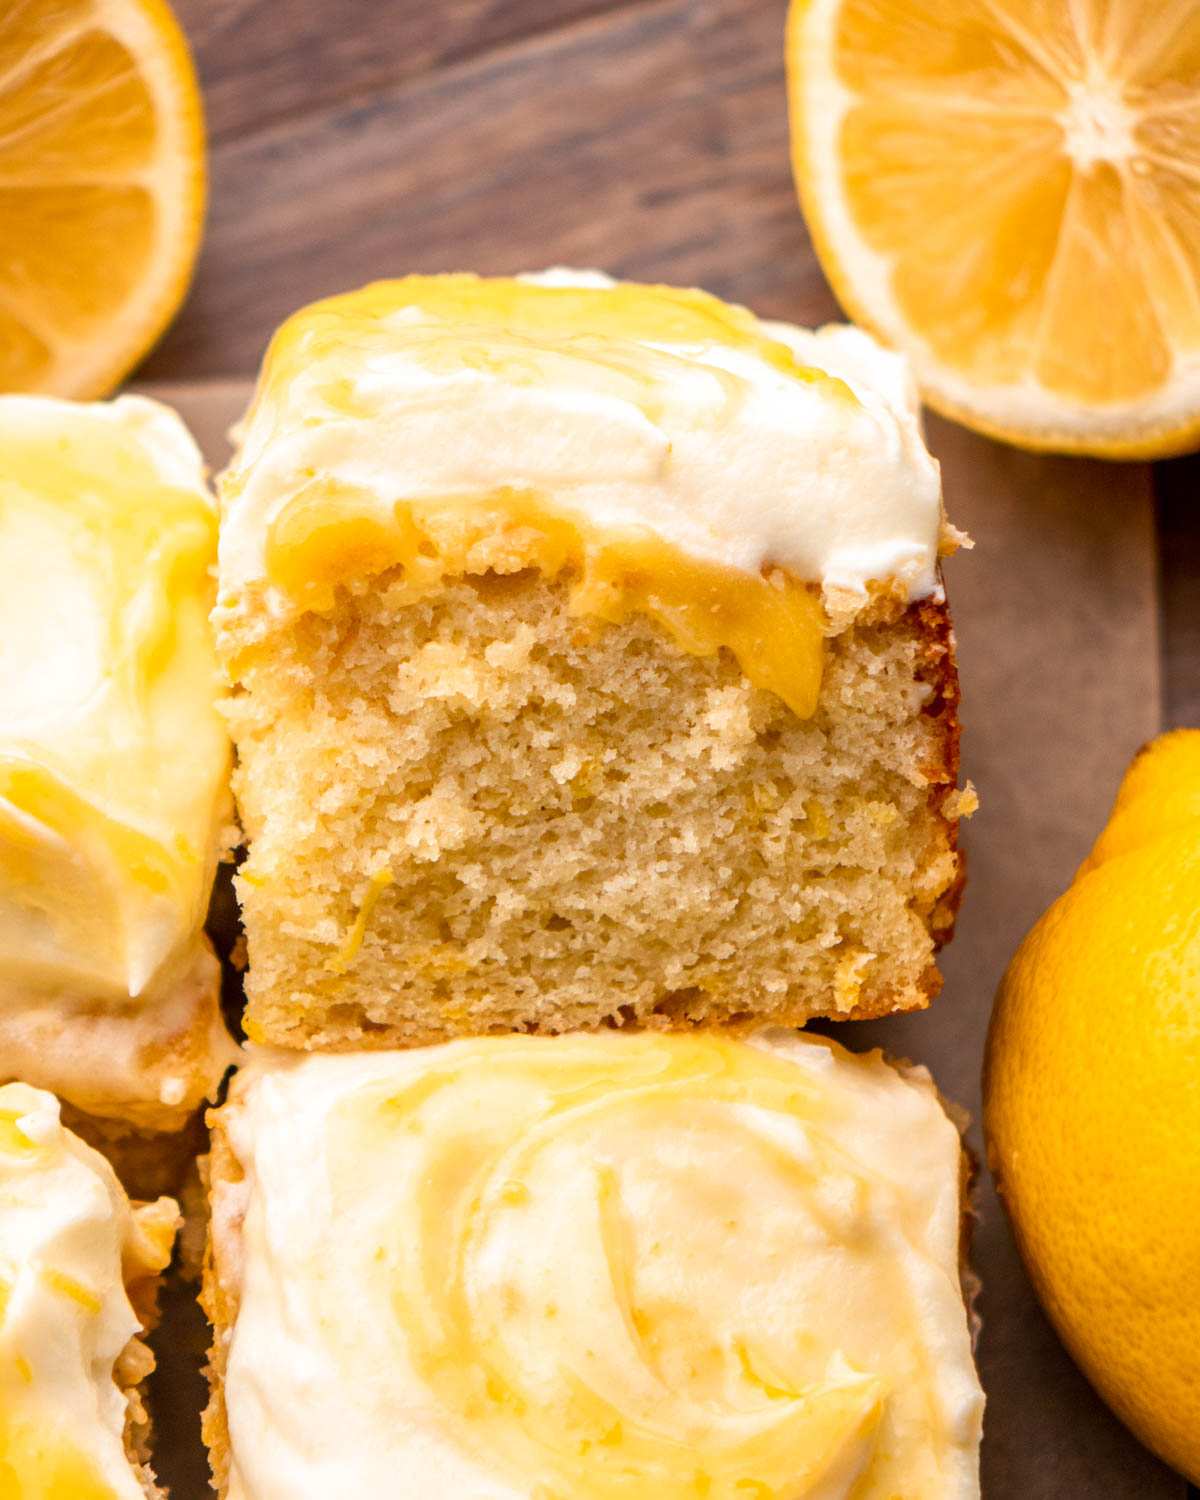 slice of lemon curd cake on its side with lemons around